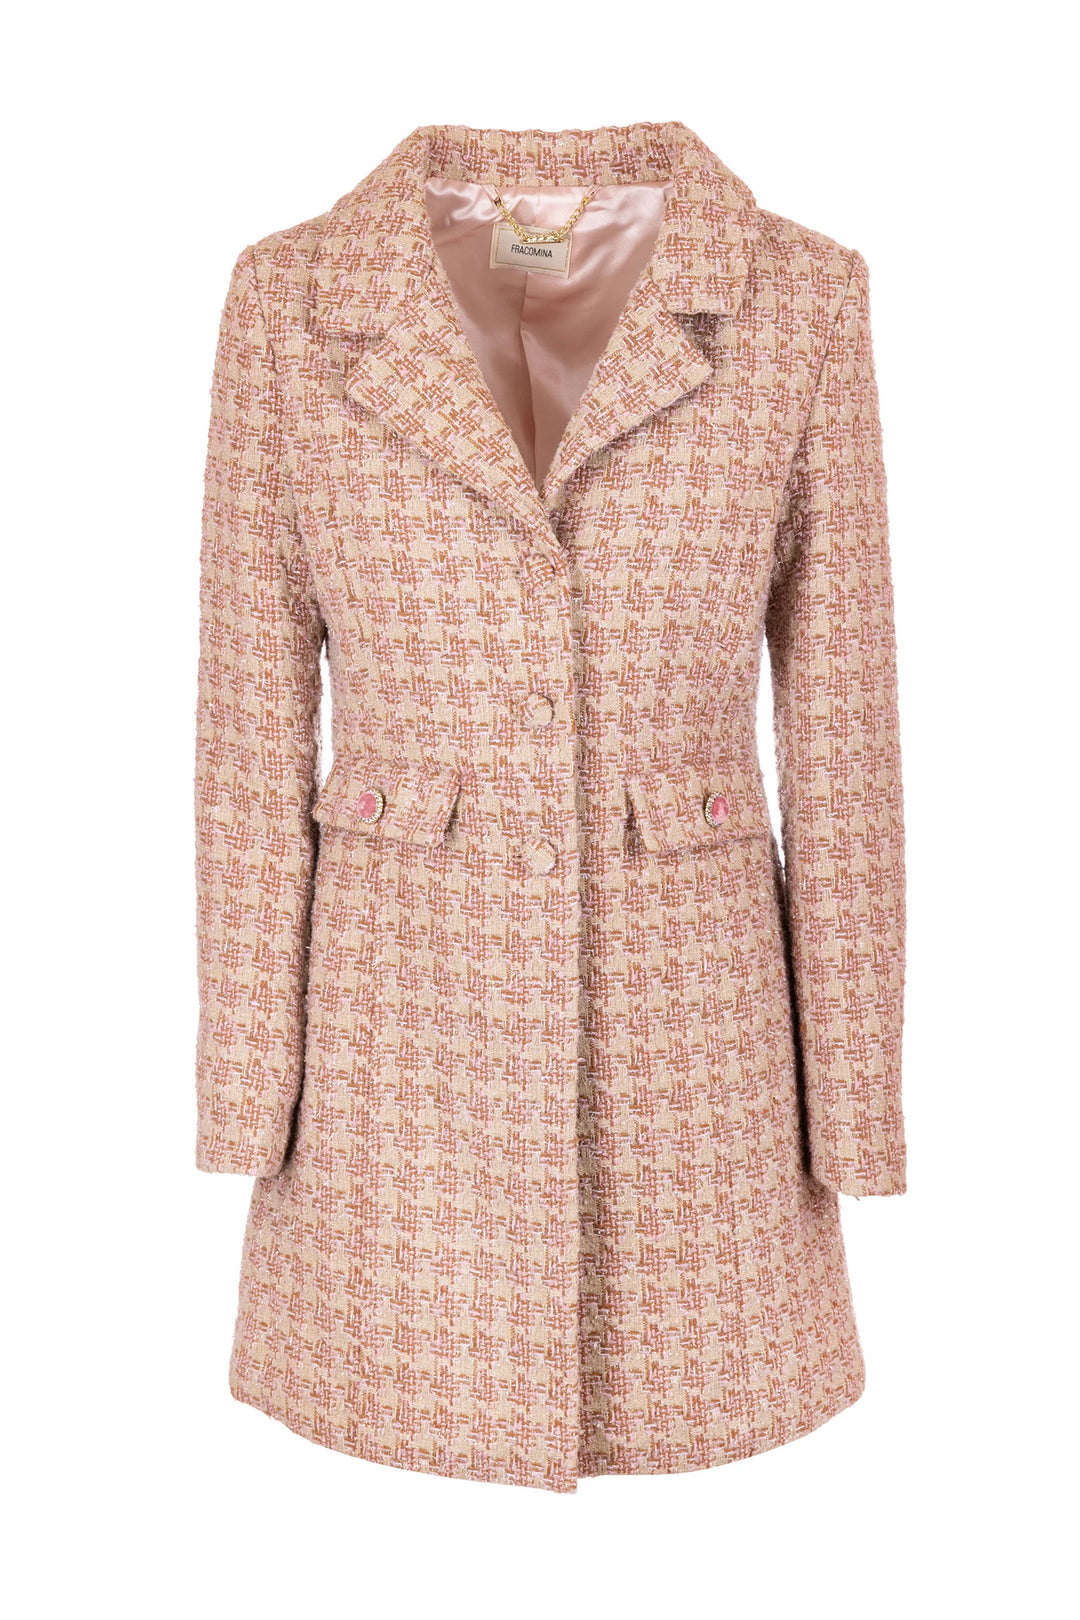 FRACOMINA Cappotto slim monopetto rosa polvere in tweed - Mancinelli 1954